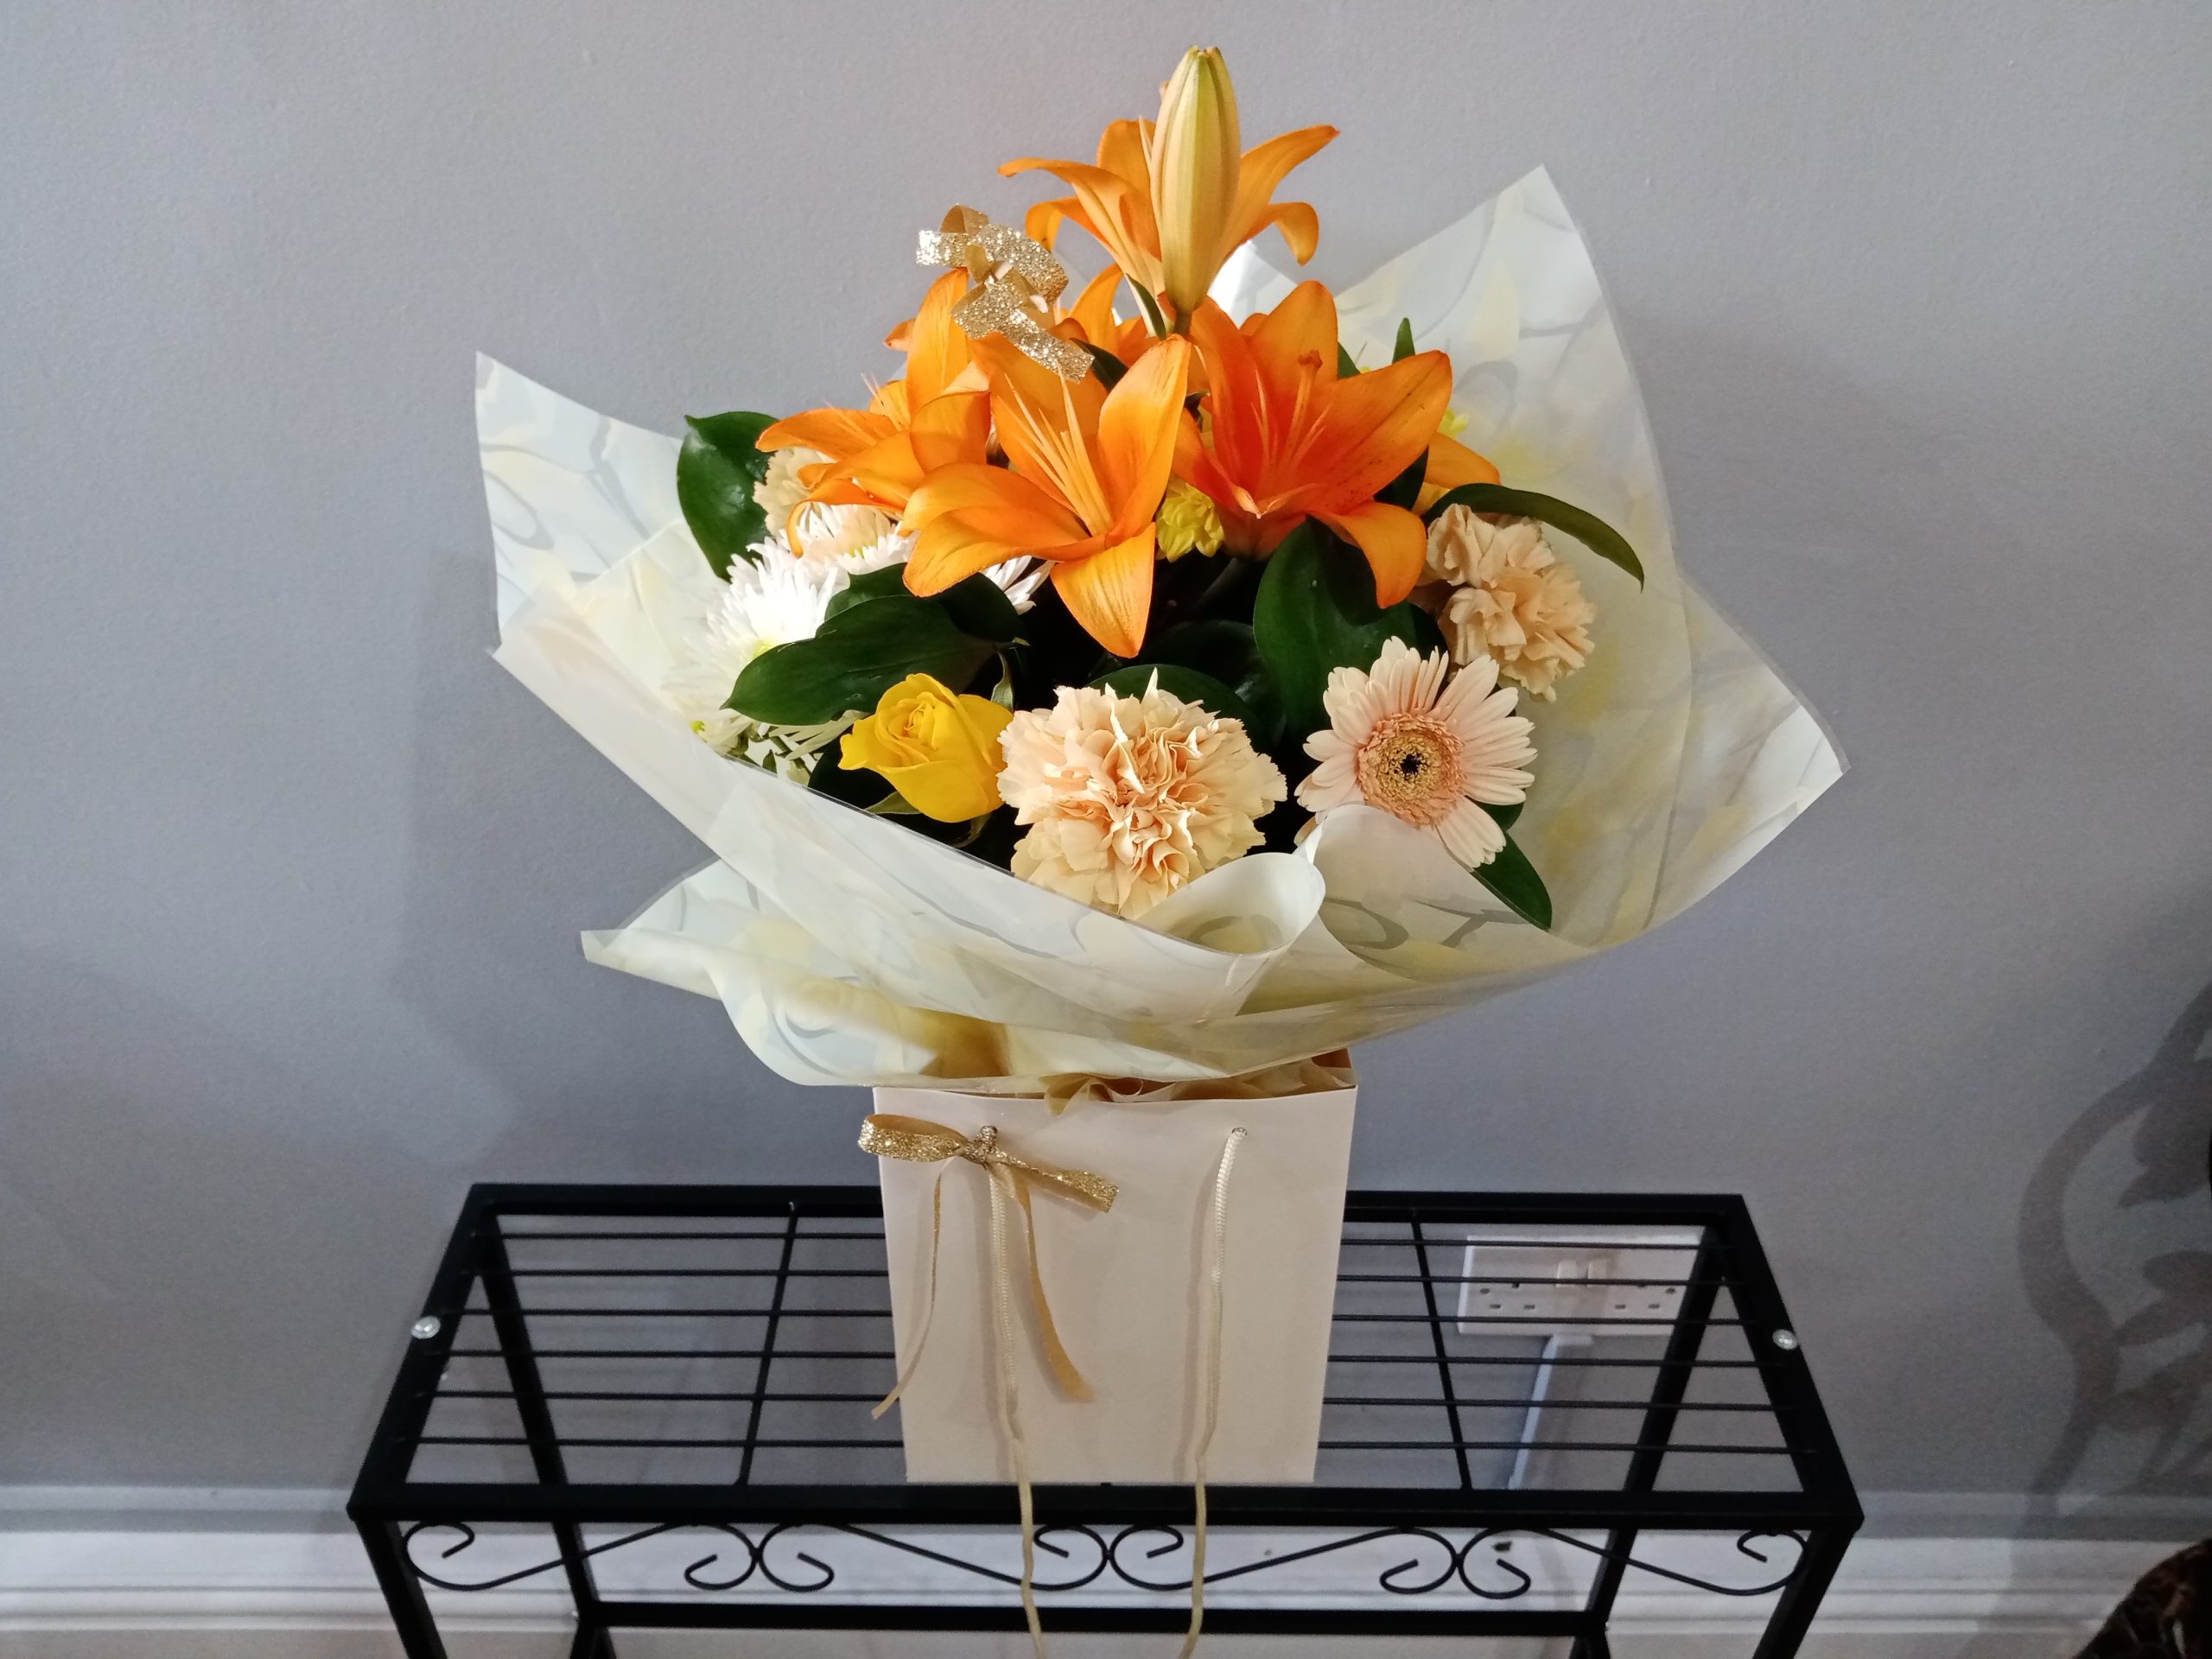 jo's florist telford flower arrangement 6